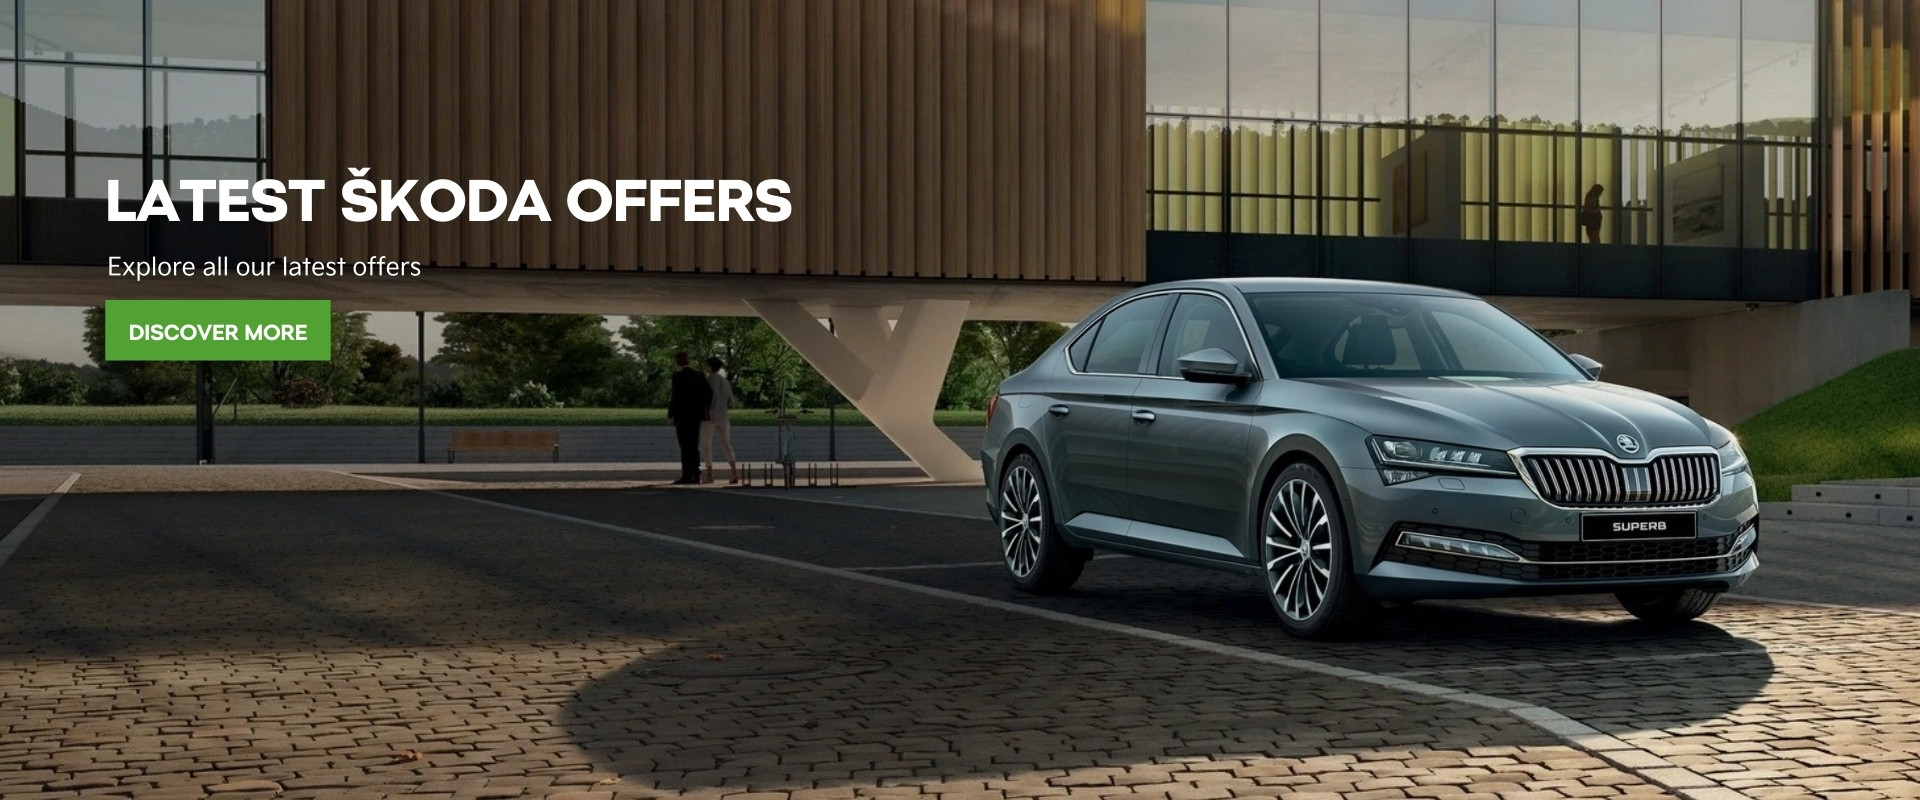 Explore all our latest Škoda Offers